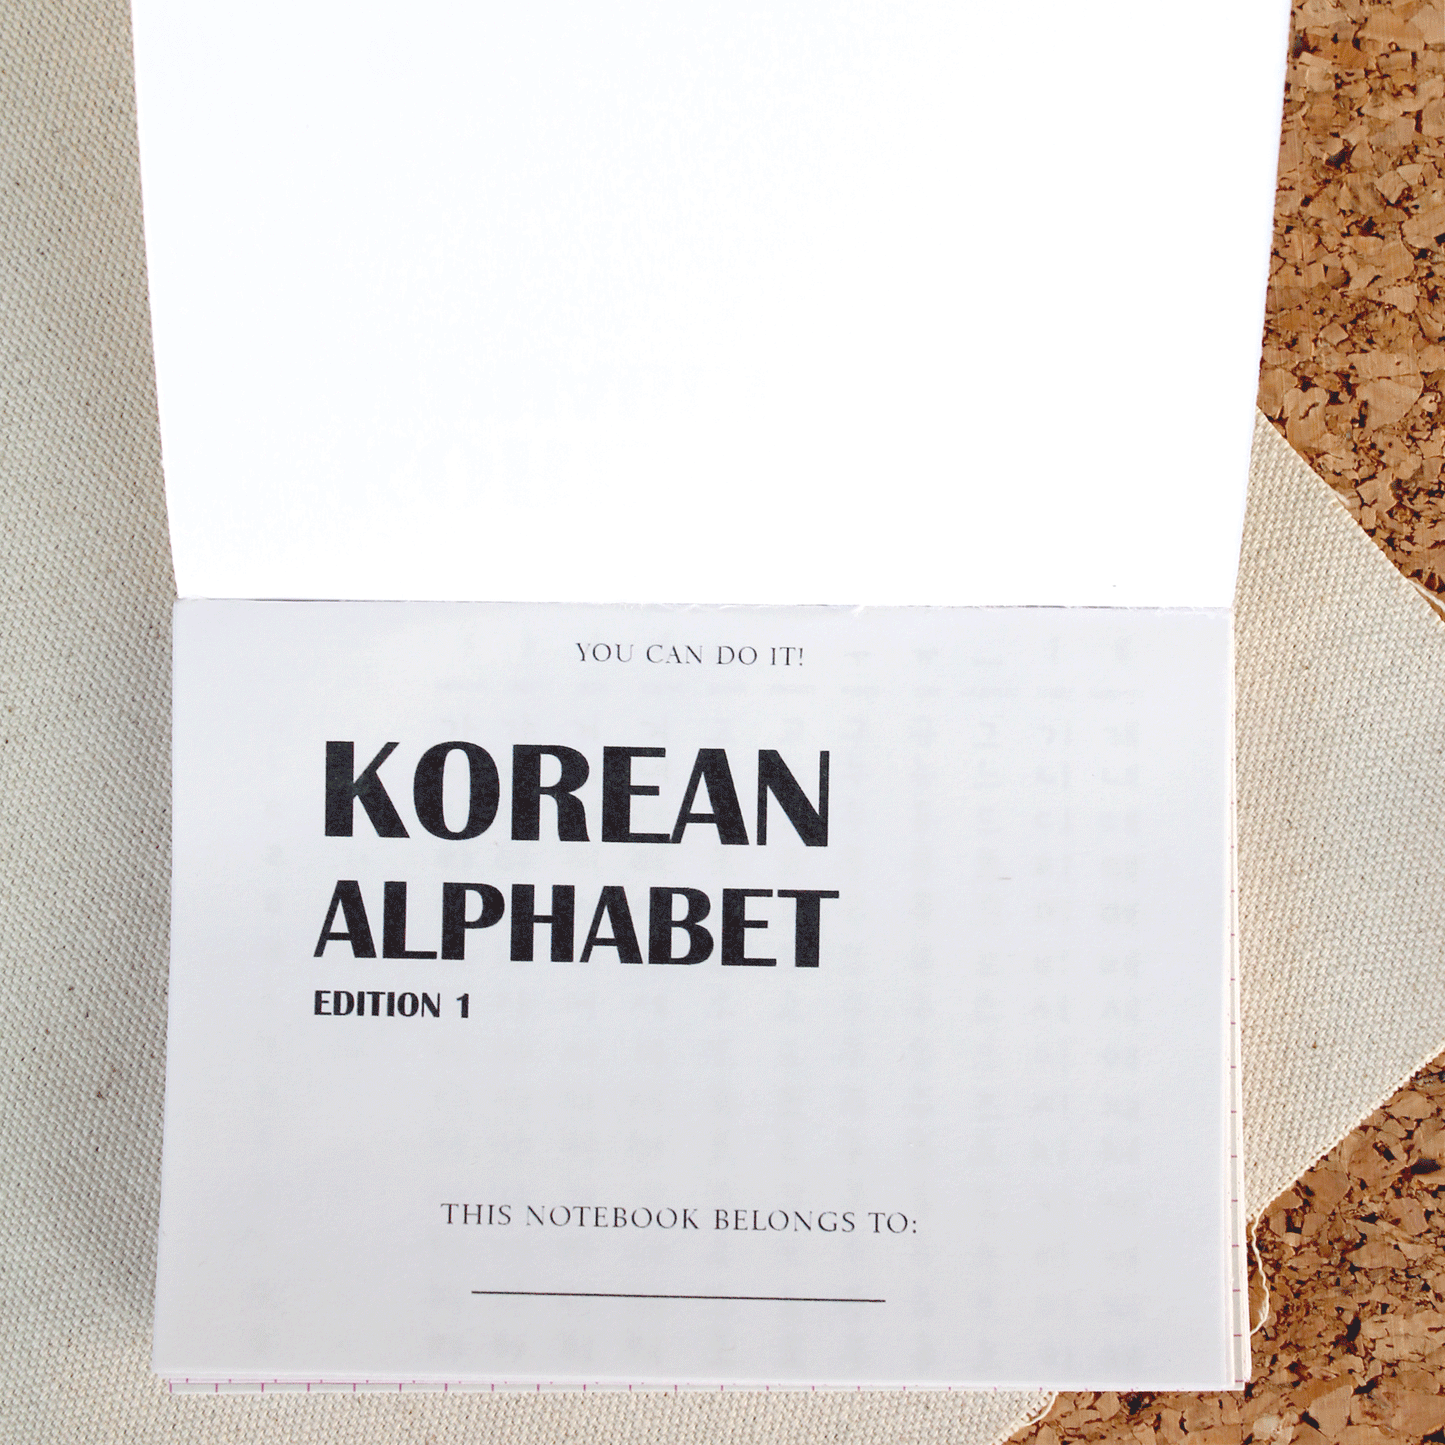 Korean Alphabet Notebook A6 - Edition 1 Travel Size